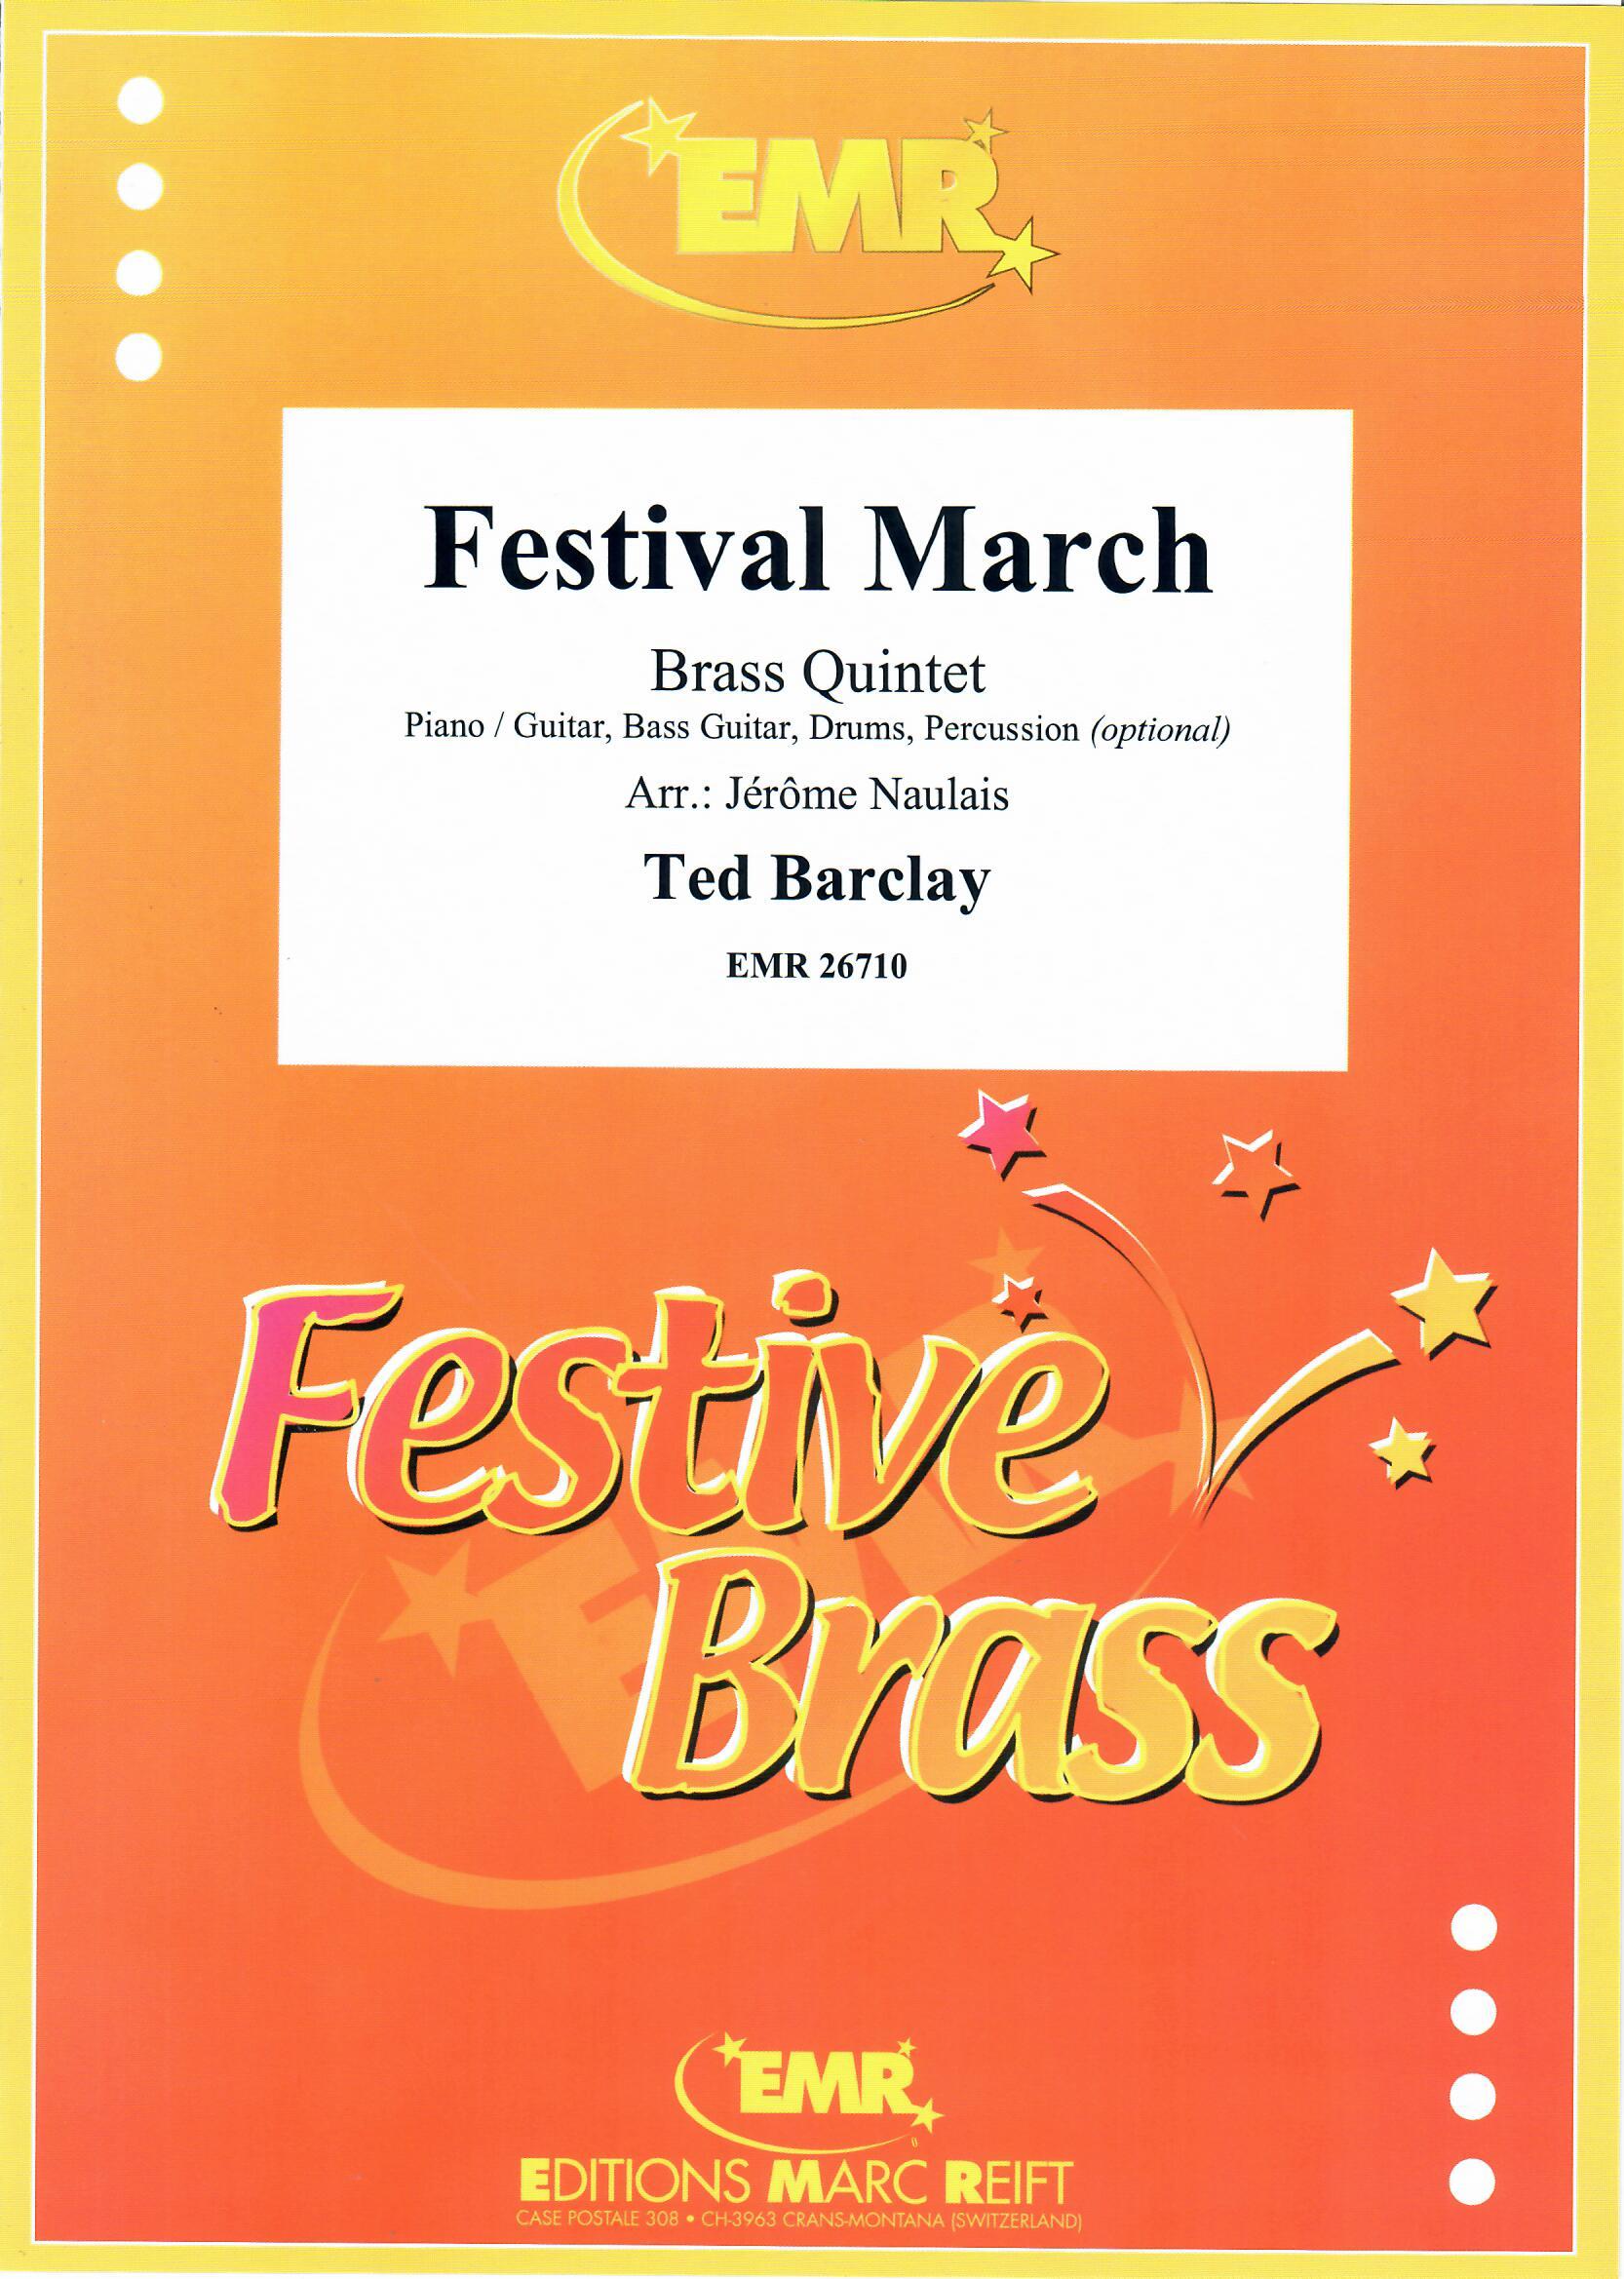 FESTIVAL MARCH - Brass Quintet